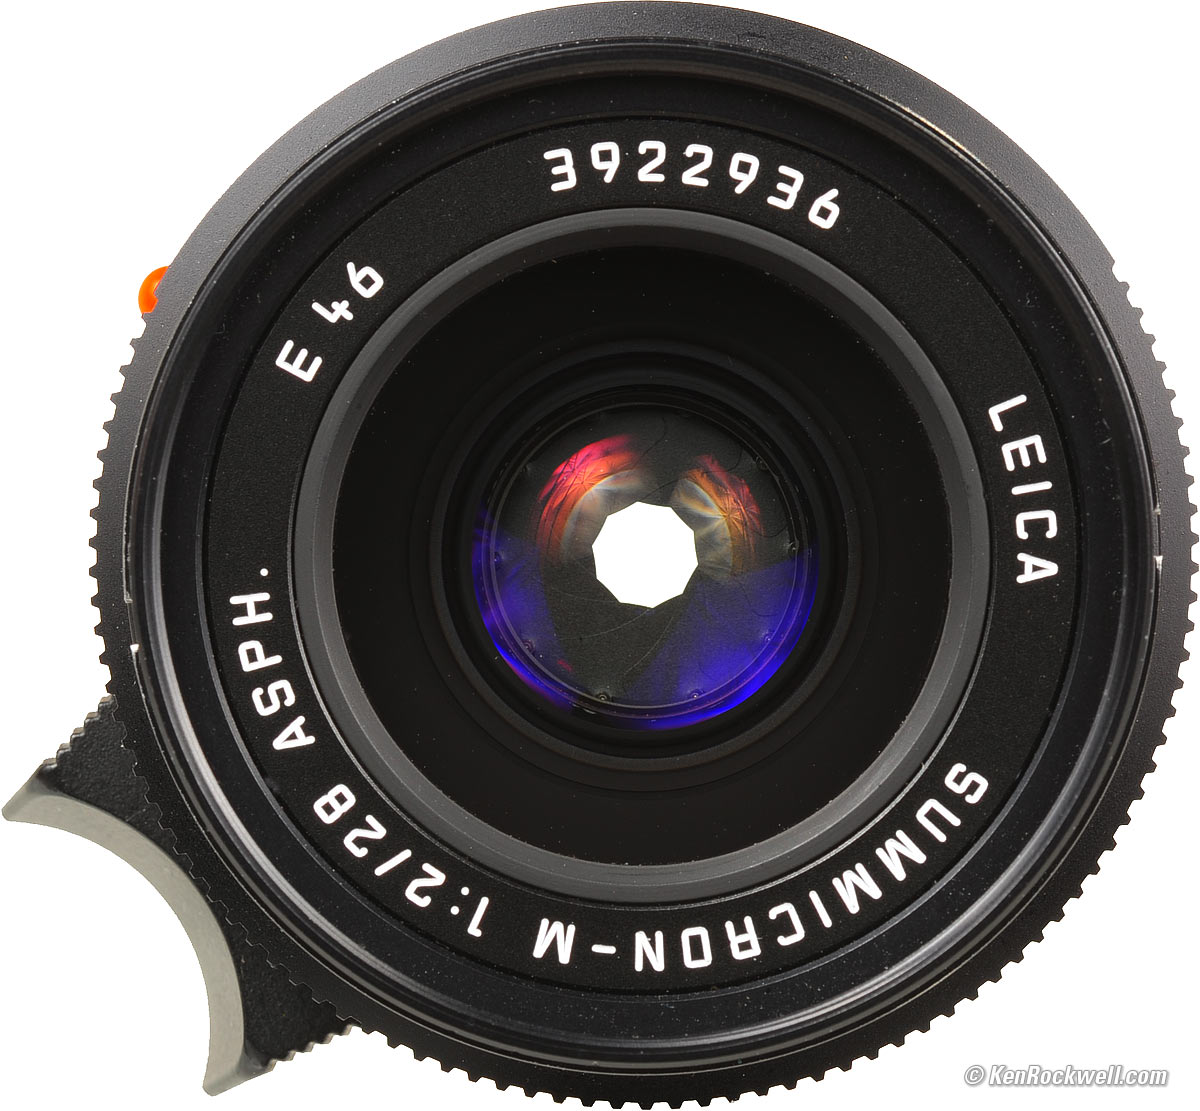 Leica 28mm f/2 Summicron-M ASPH